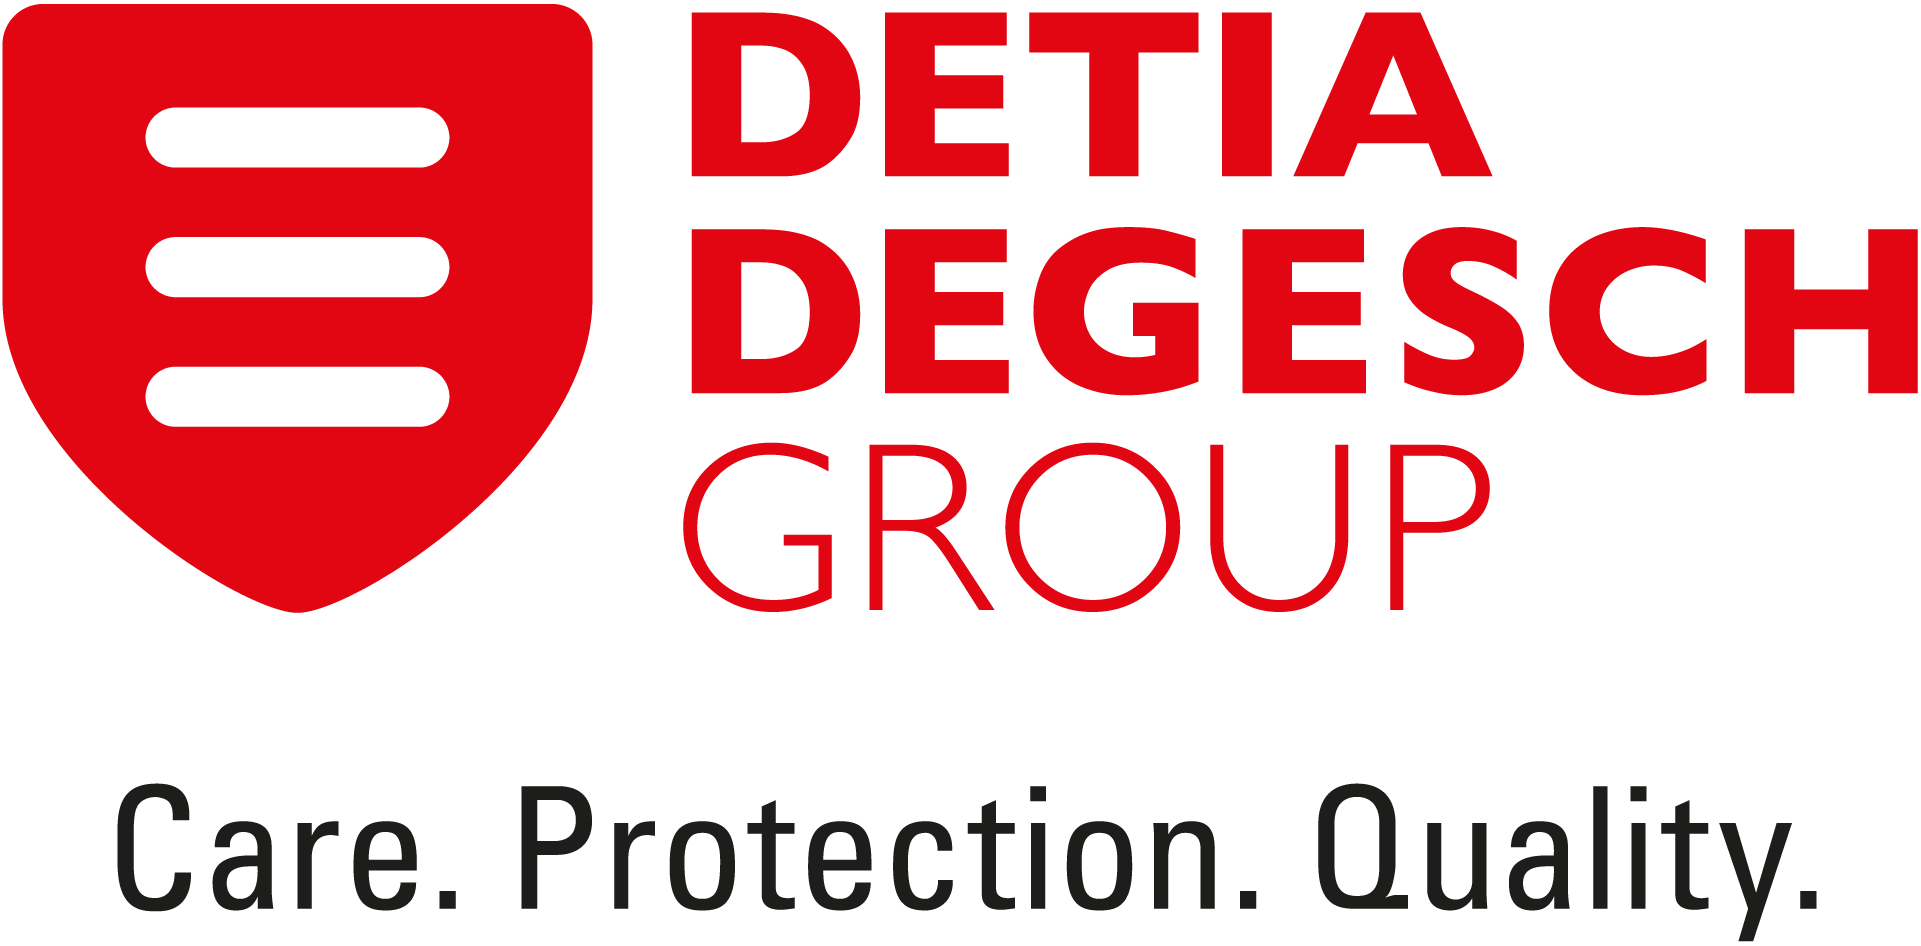 Detia Deges Group